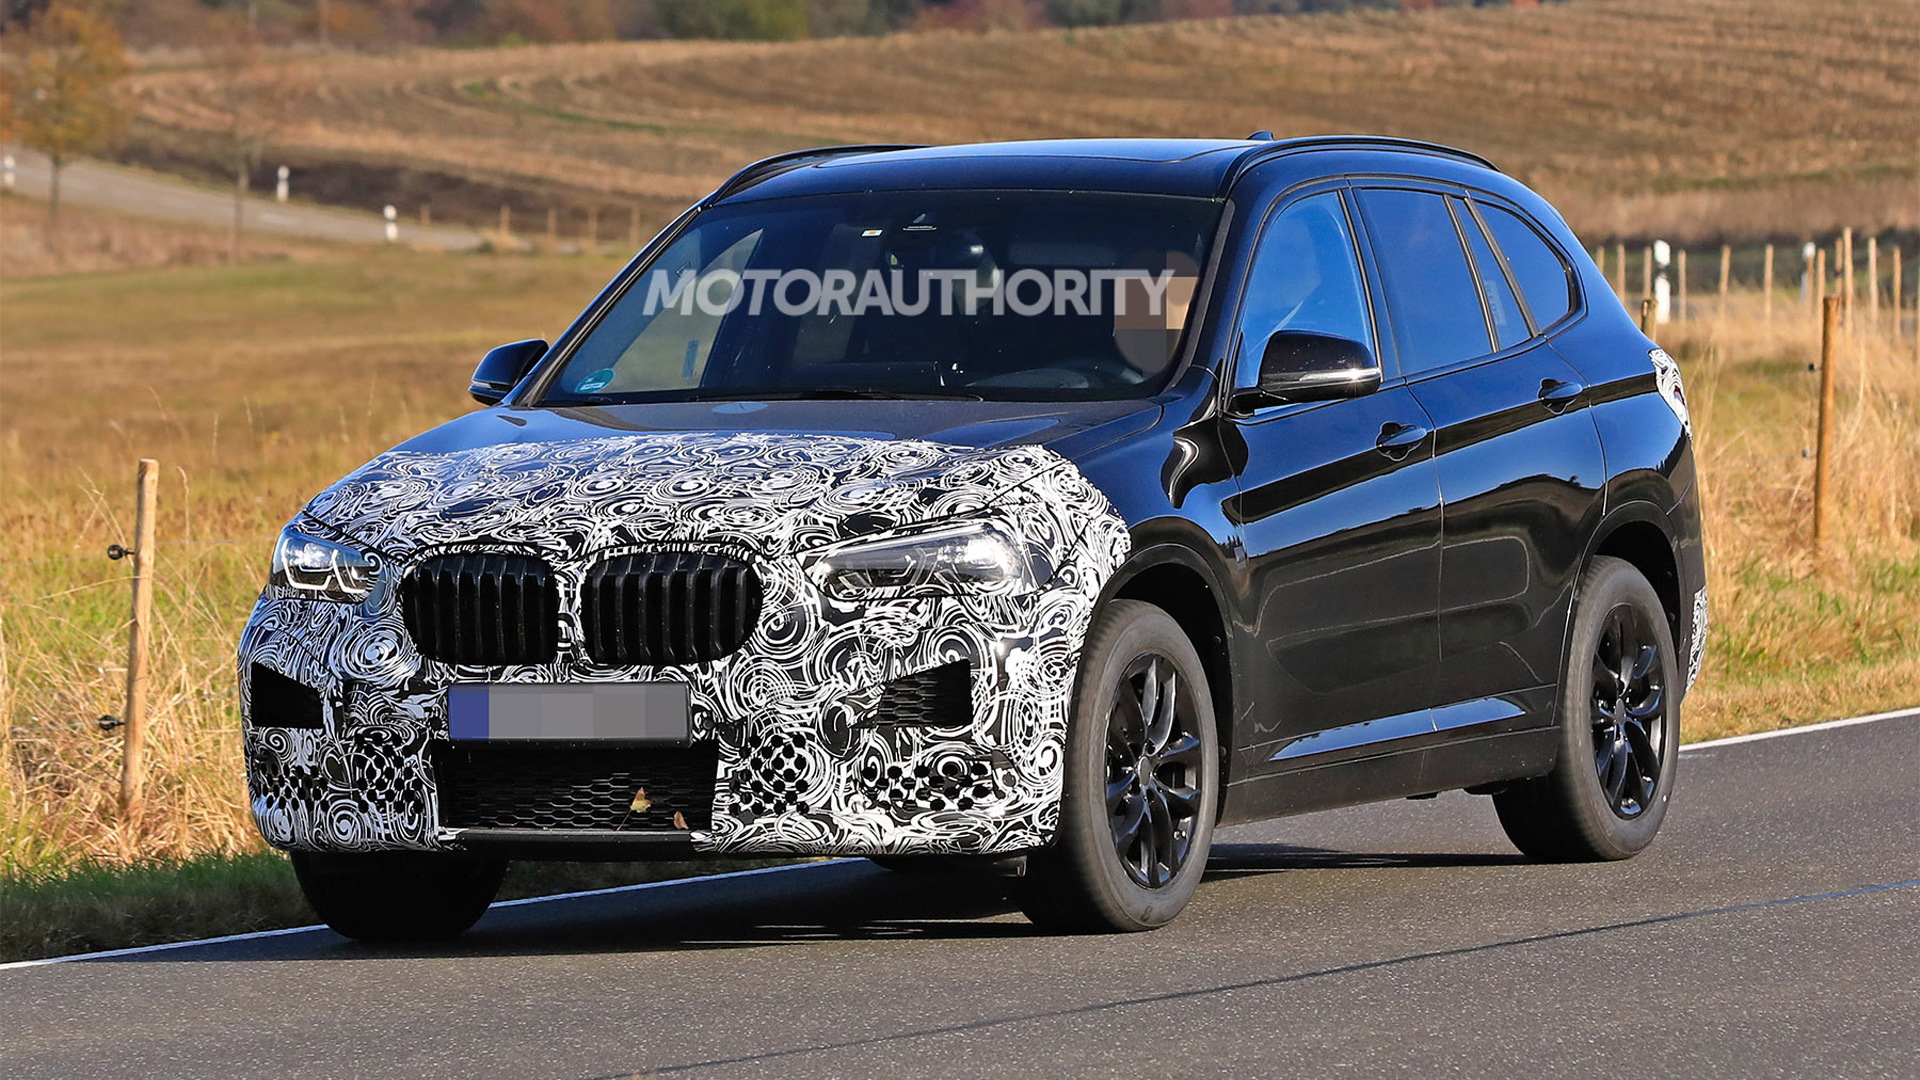 2020 BMW X1 facelift spy shots - Image via S. Baldauf/SB-Medien